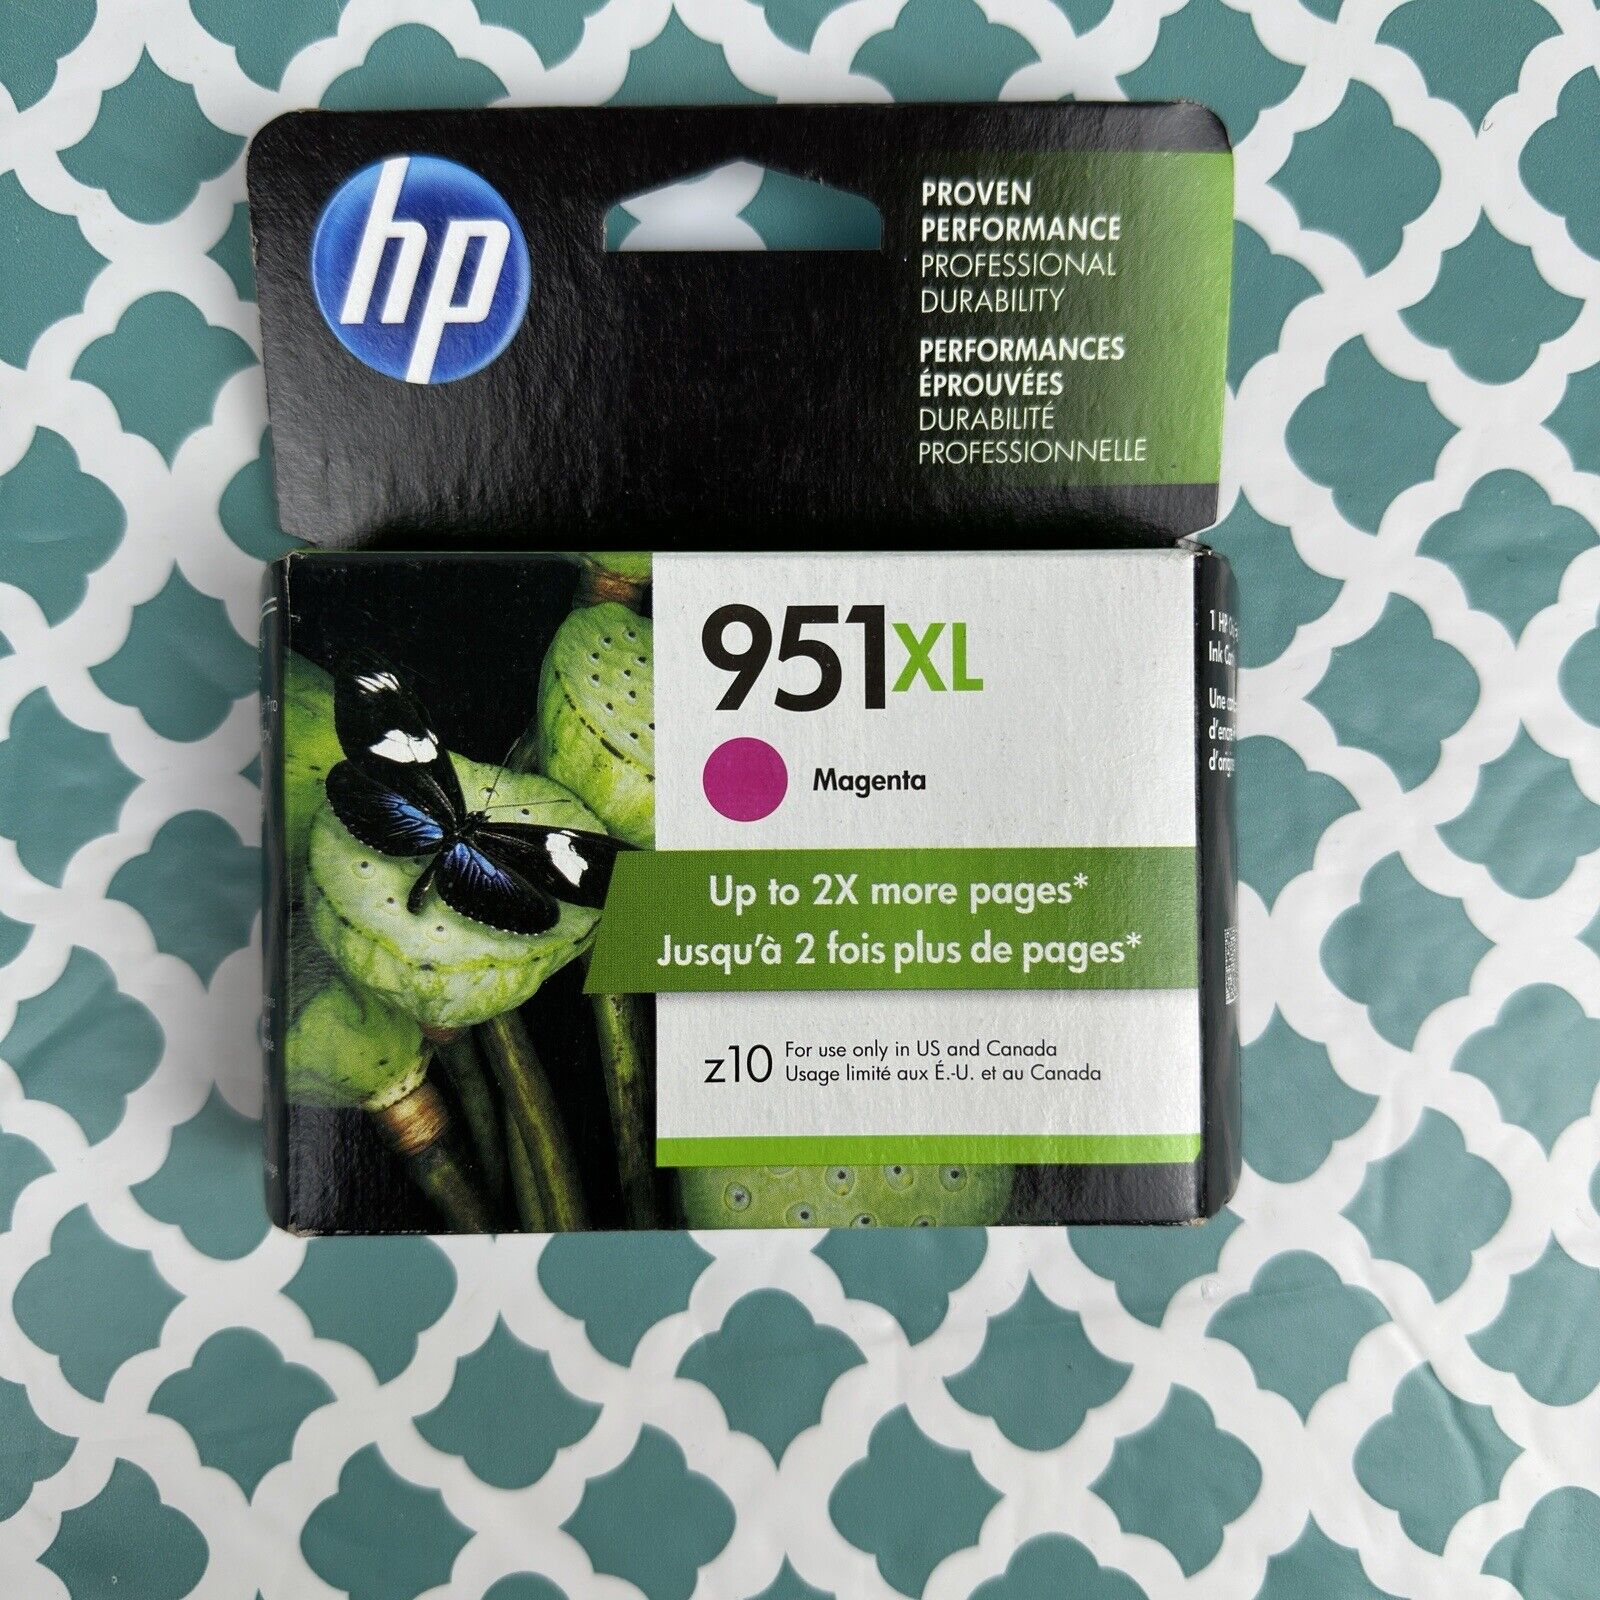 HP 951XL Magenta Ink Cartridge CN047AN Genuine New in Box SEALED exp 08/2020